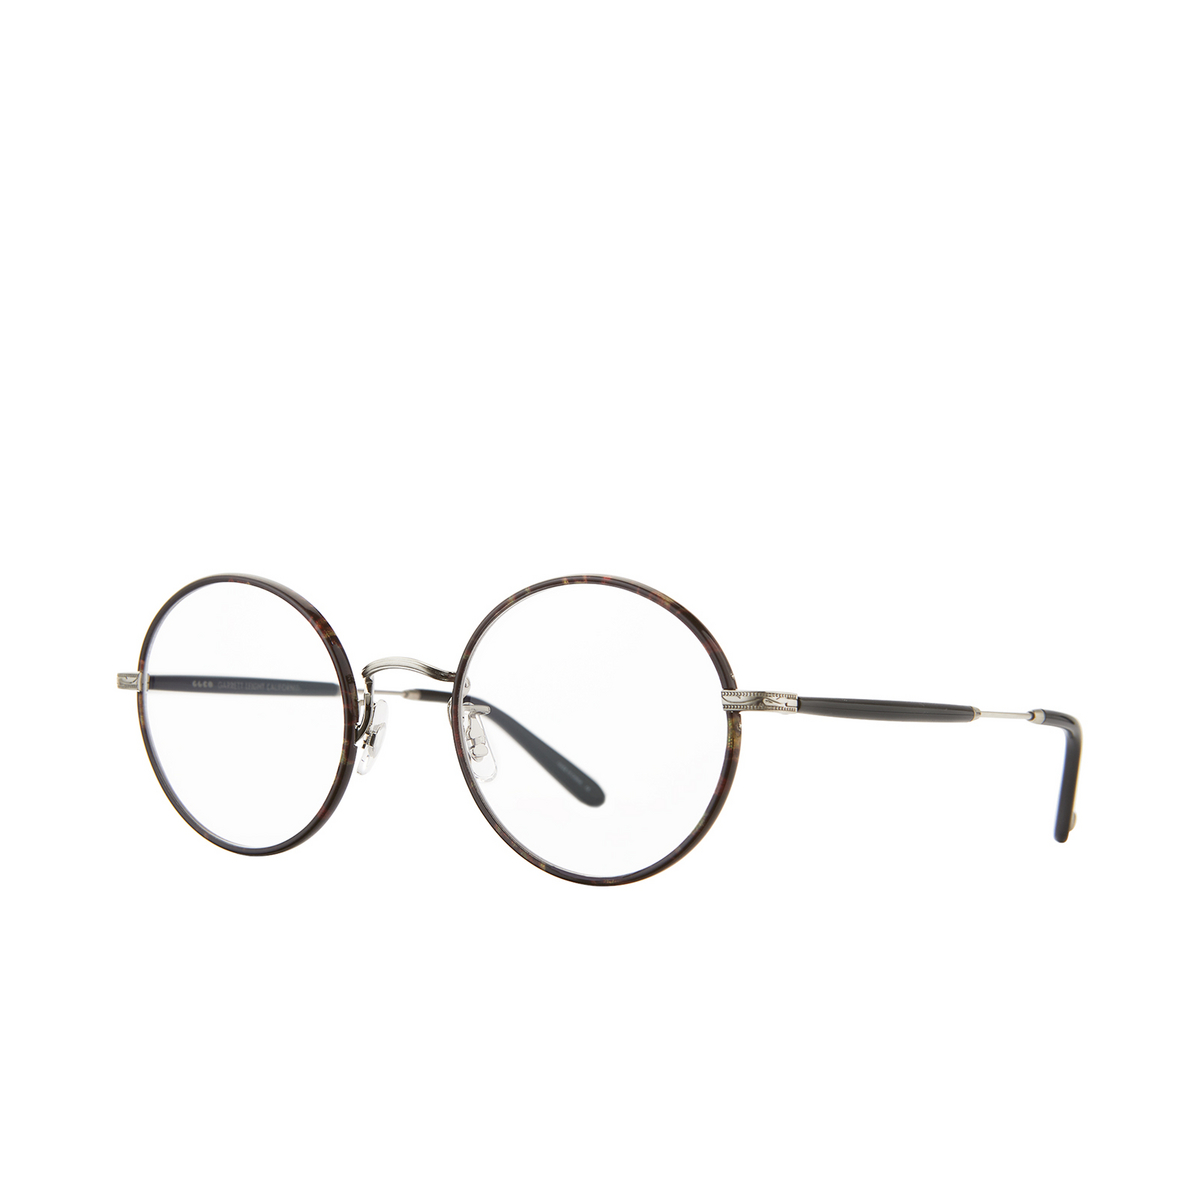 Garrett Leight® Round Eyeglasses: Fonda color Bourbon Tortoise - Brushed Silver Bbt-bs-bk - three-quarters view.